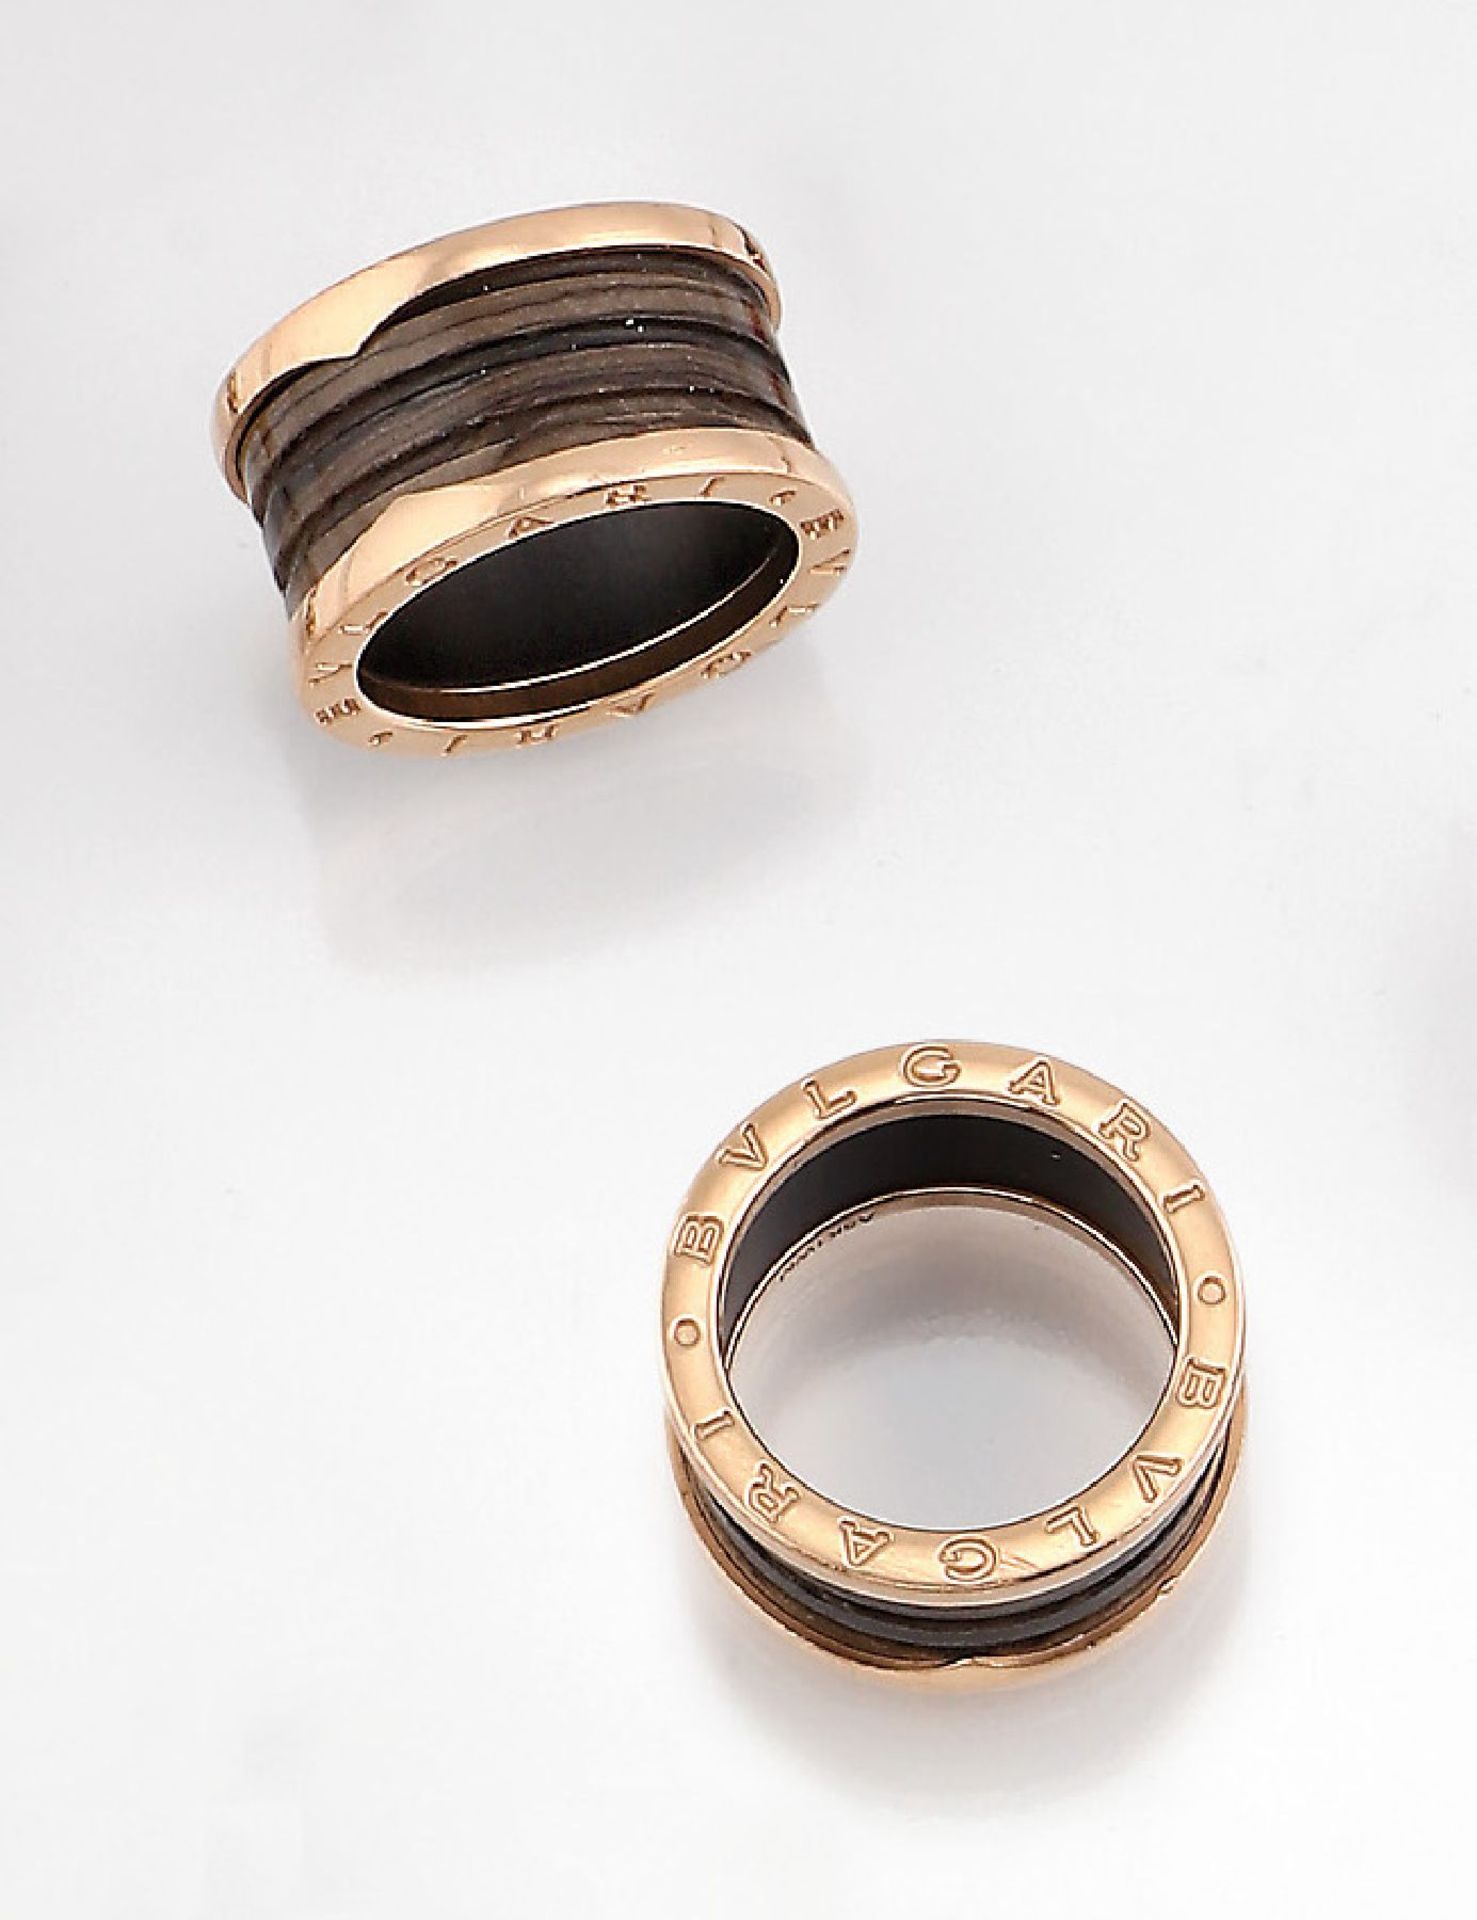 18 kt Gold BULGARI Ring, Modell B Zero, RG 750/000, braun strukturierte Keramikeinlage, RW 52,